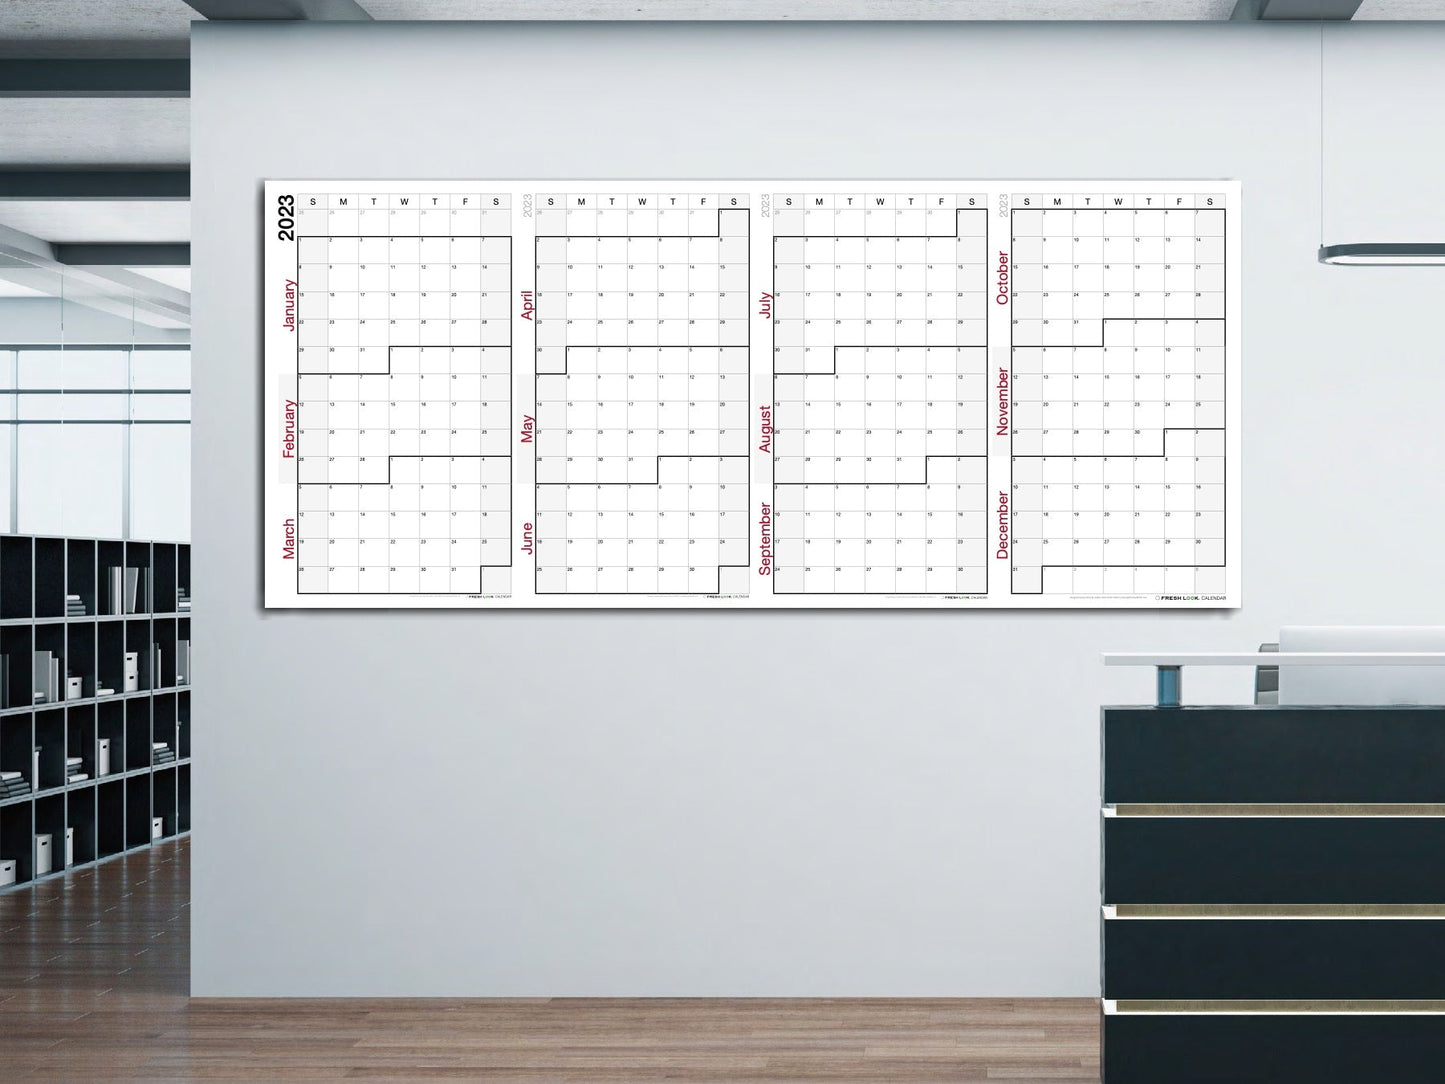 2023 Q3 Calendar Large